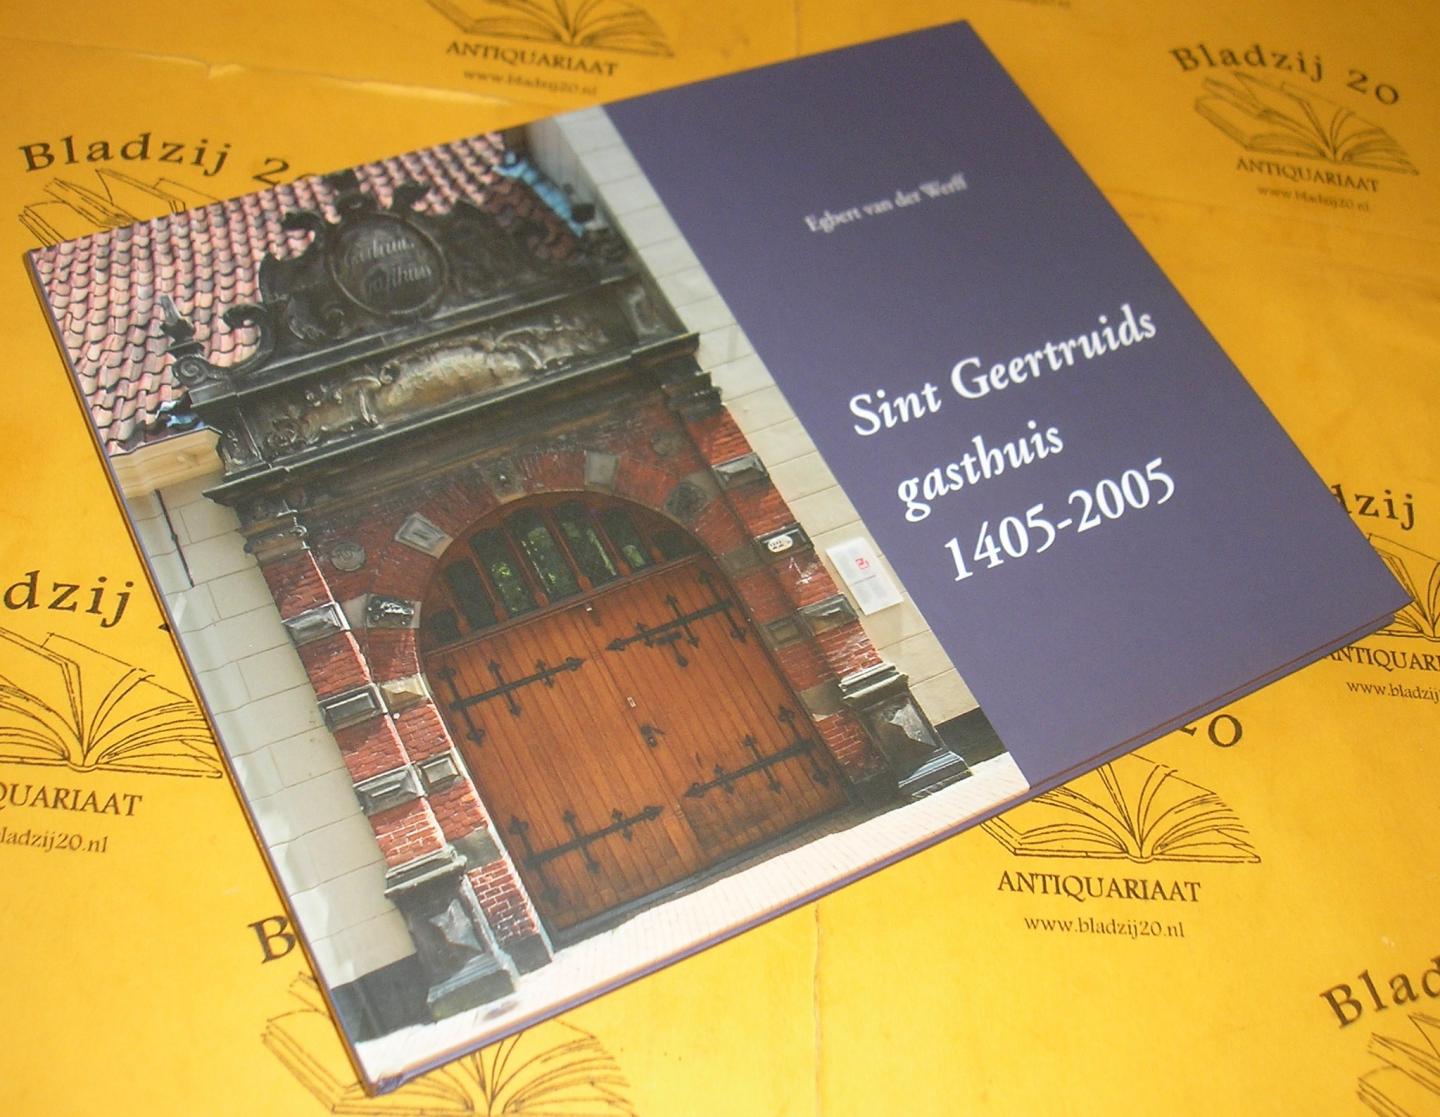 Werff, Egbert, van der. - Sint Geertruids gasthuis 1405-2005.